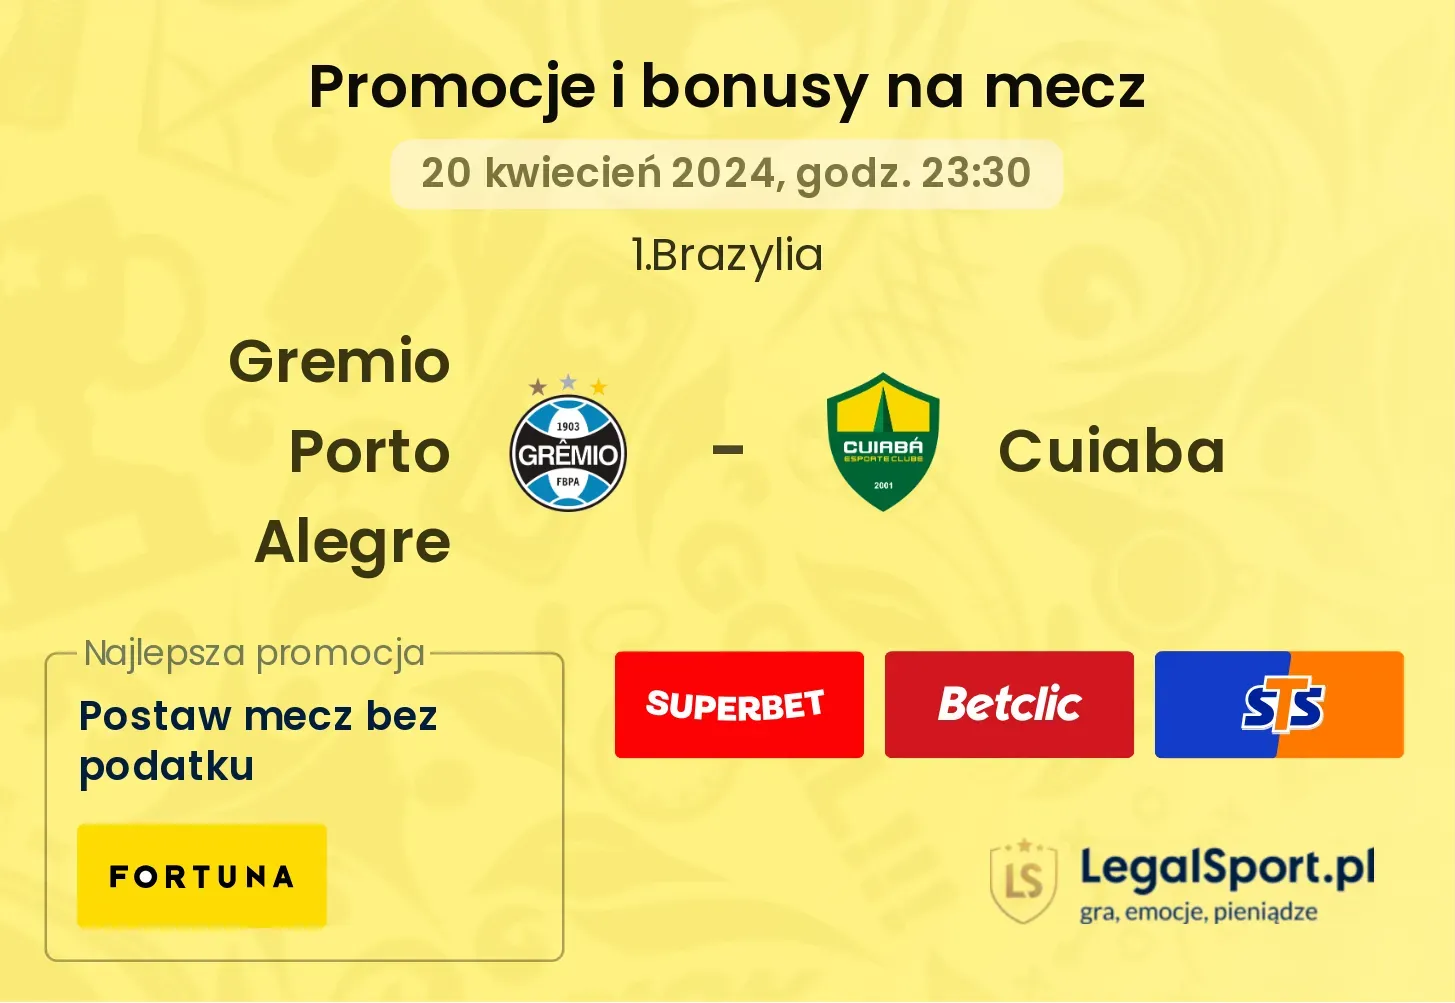 Gremio Porto Alegre - Cuiaba promocje bonusy na mecz